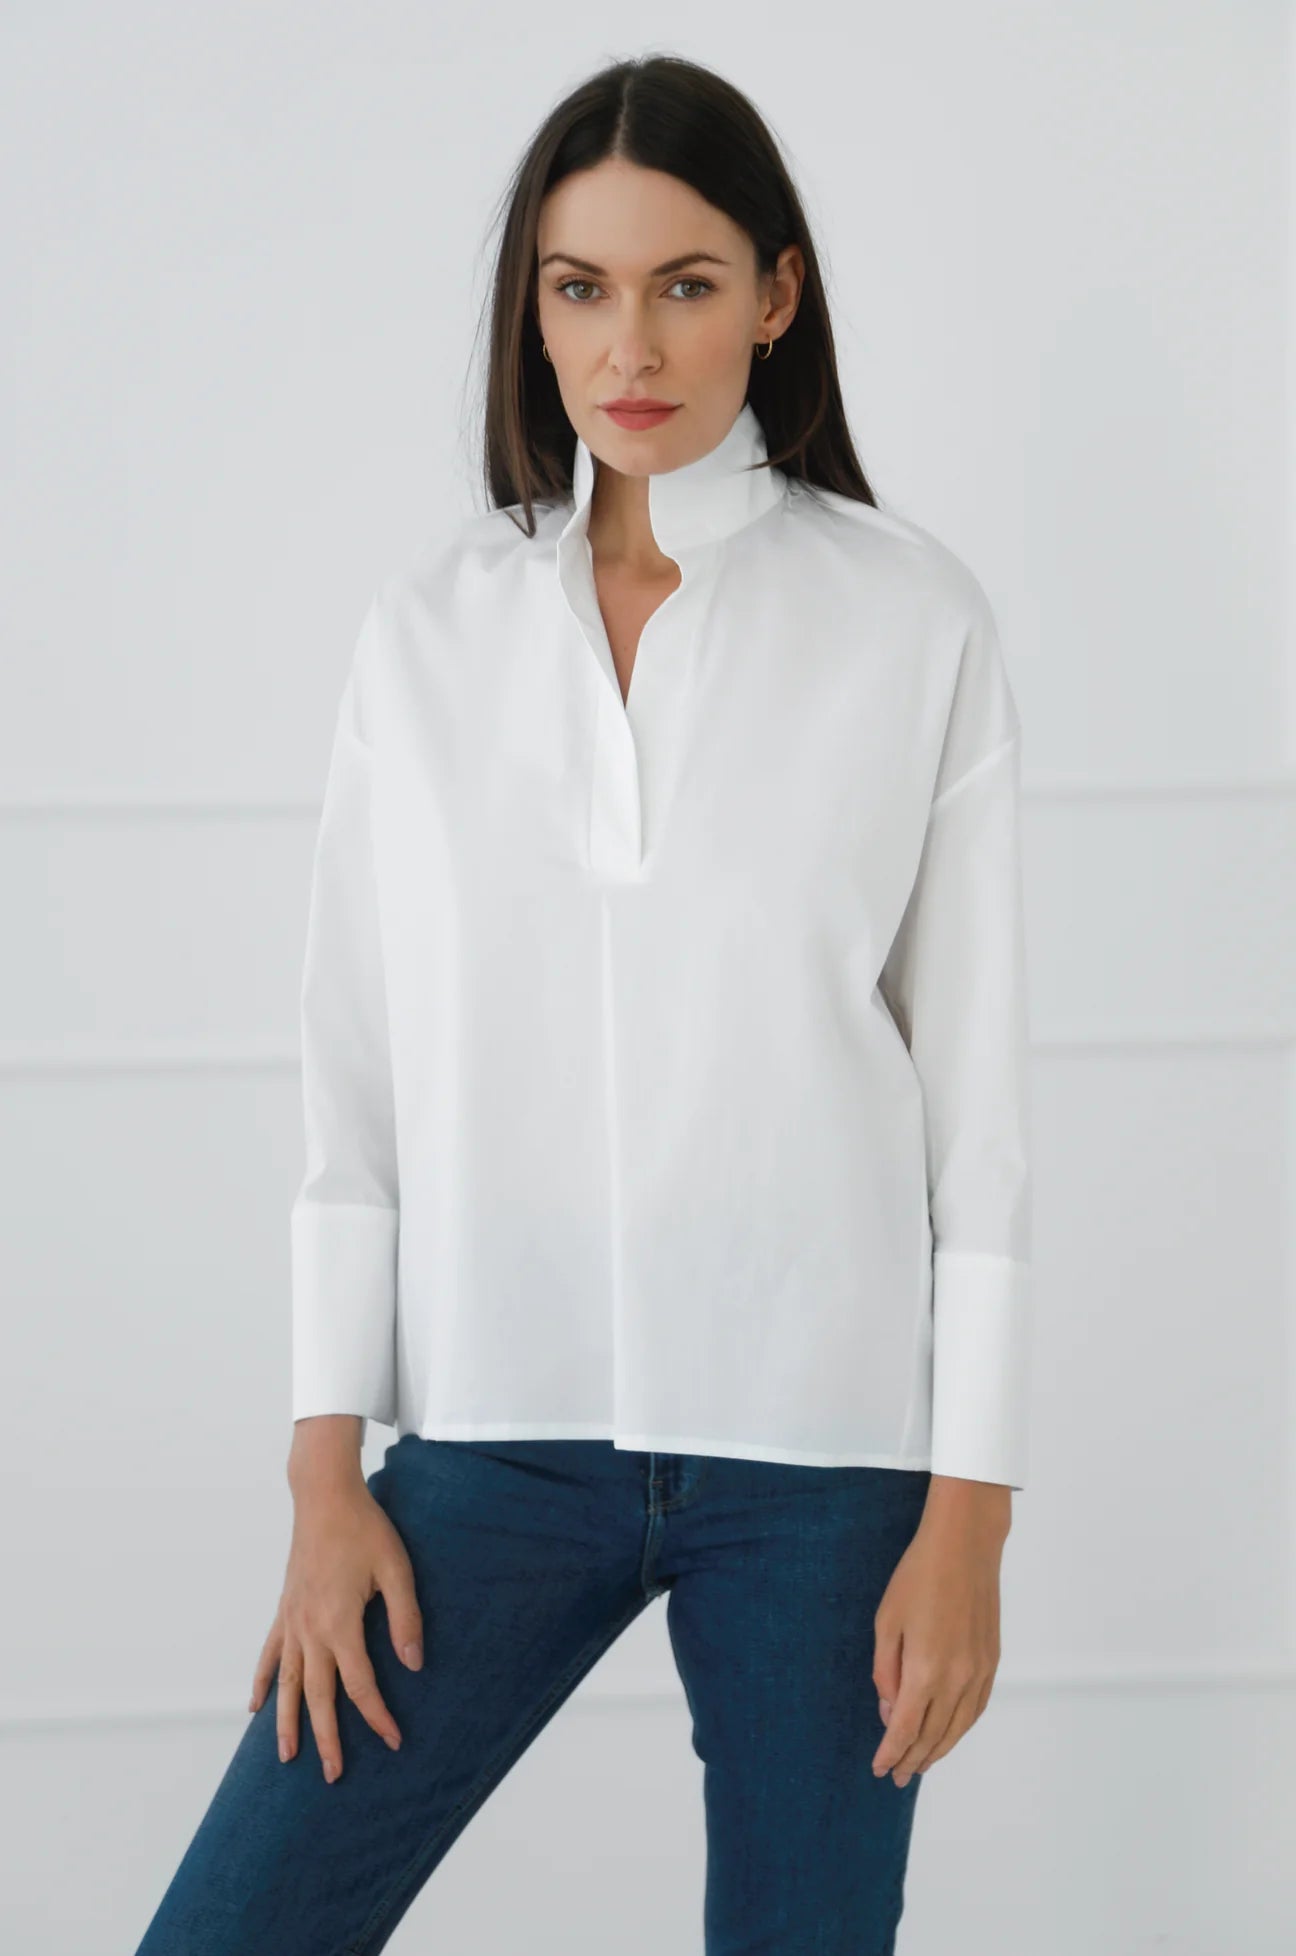 Monica Nera Grace Shirt - White or Black